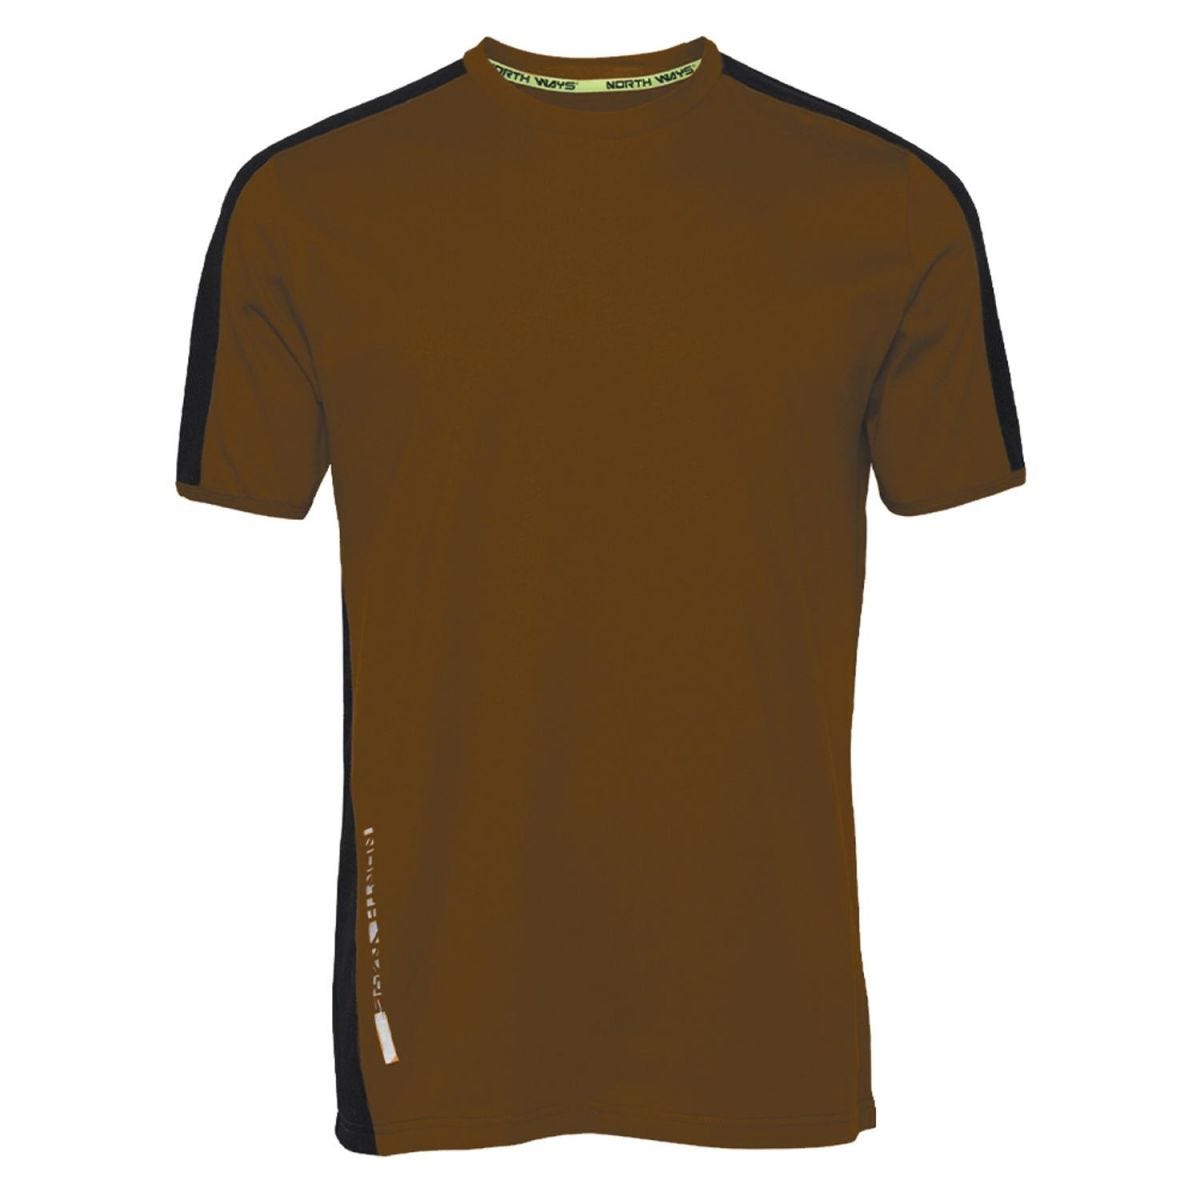 Tee-shirt à manches courtes pour homme Andy camel - North Ways - Taille L 0